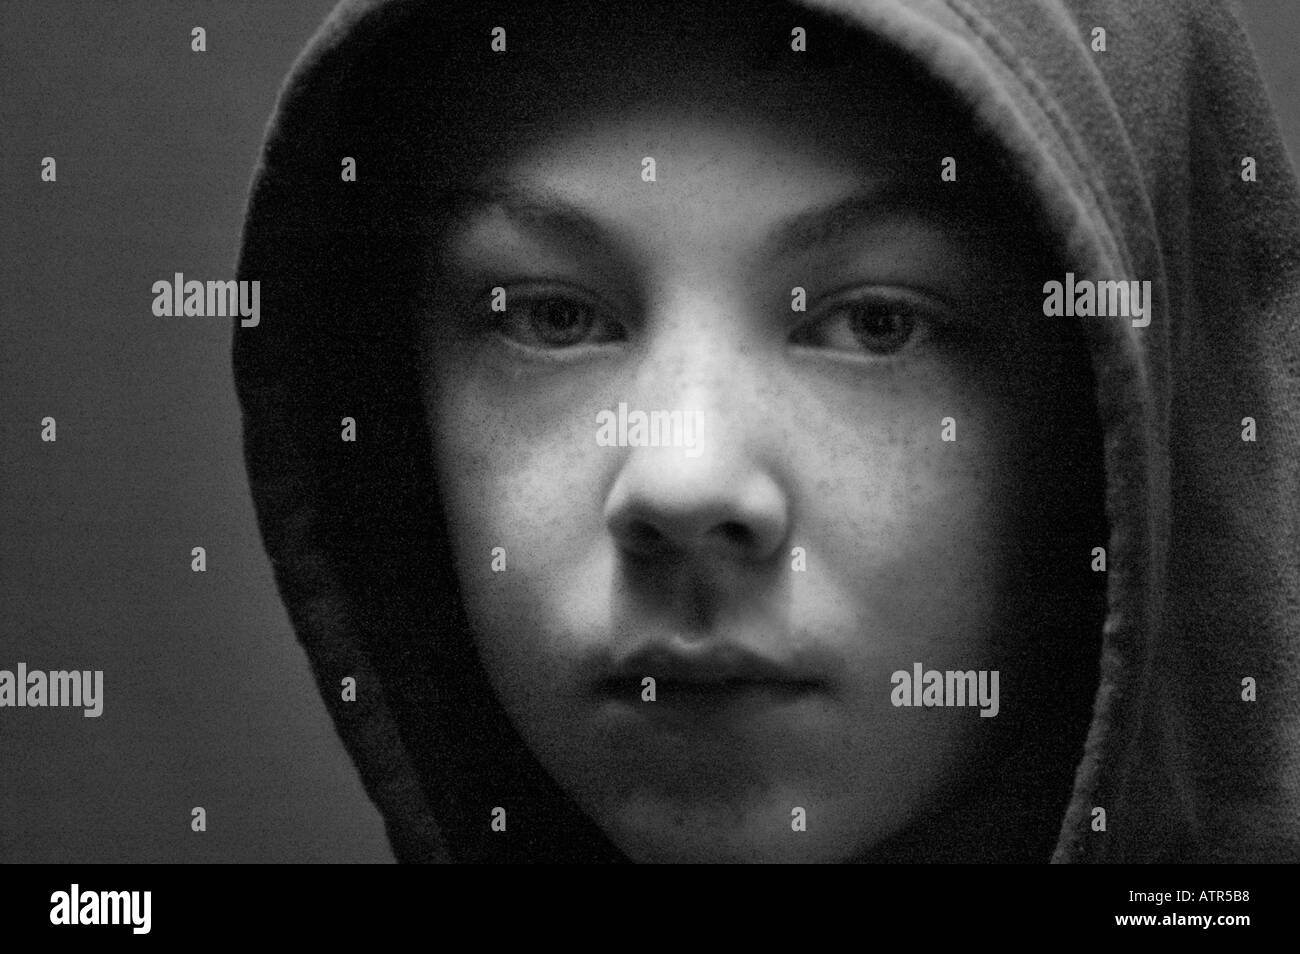 12 year old boy wearing hoodie Stock Photo